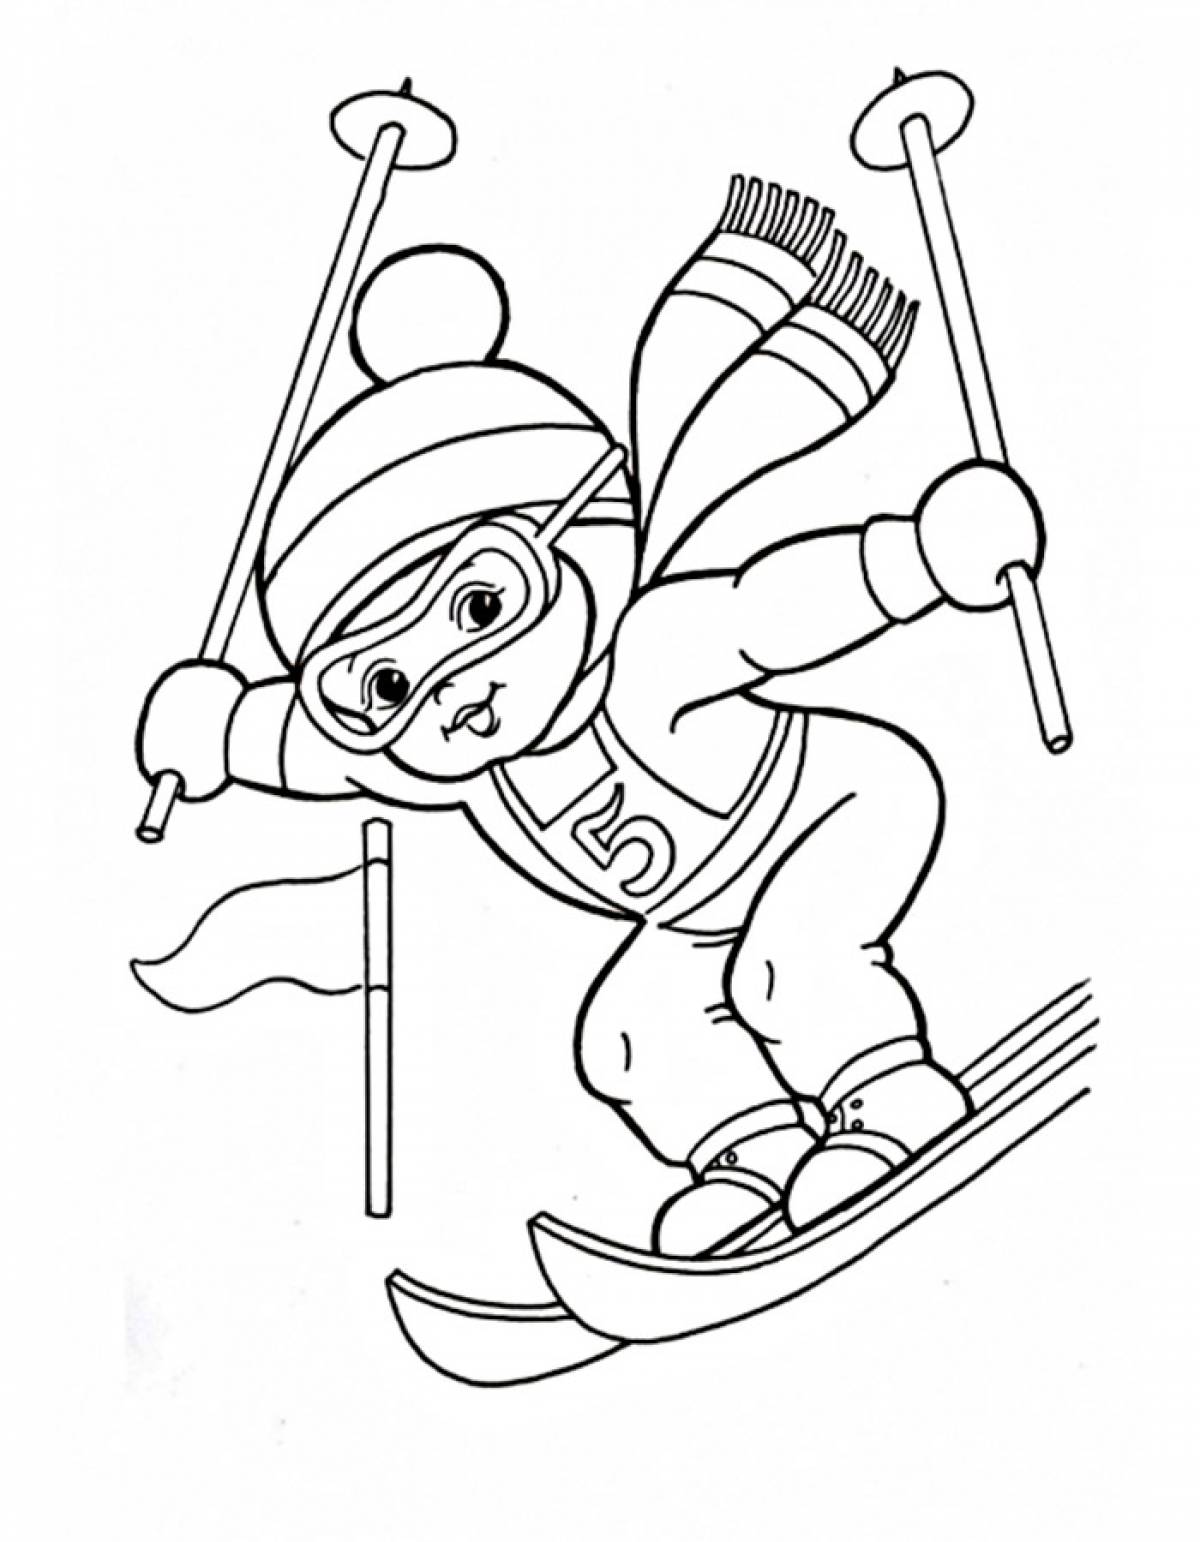 Coloring skier